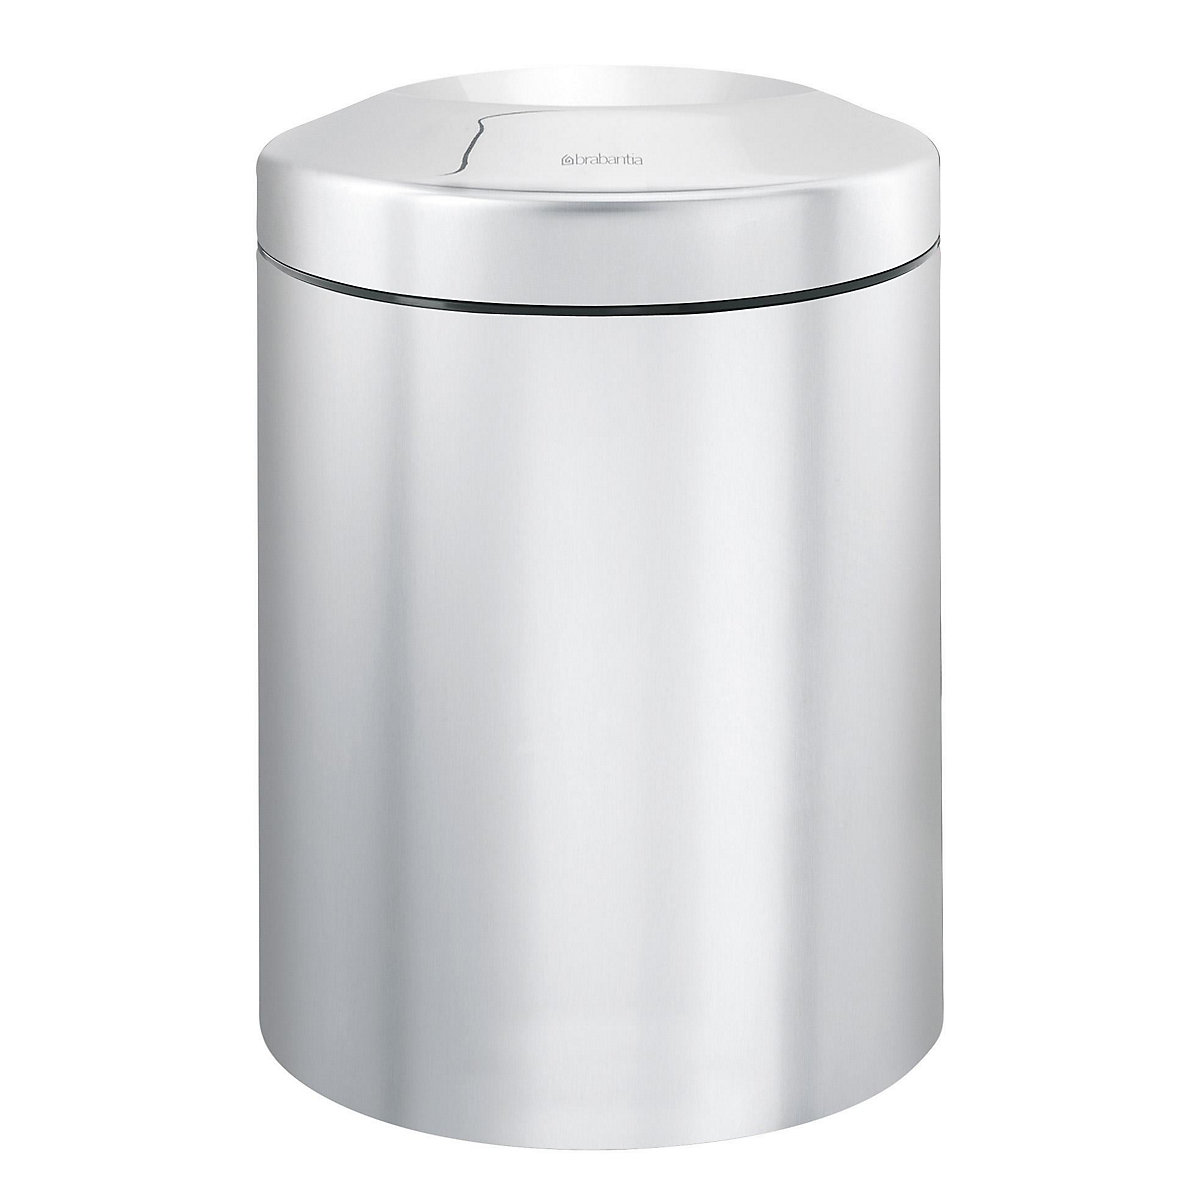 Safety waste paper bin, stainless steel - Brabantia